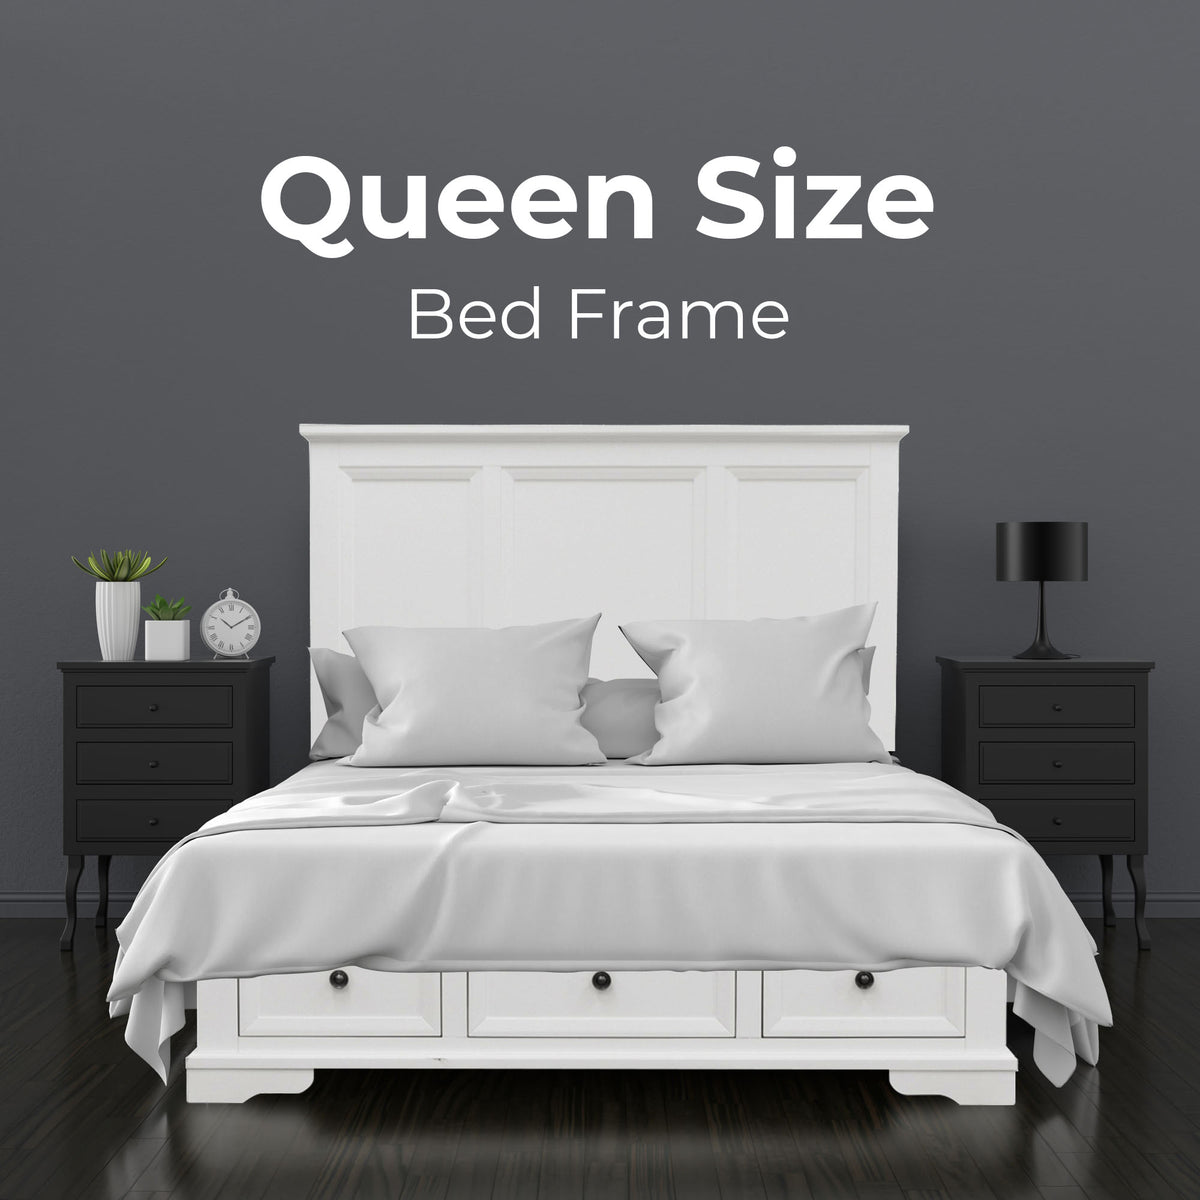 Celosia 5pc Bed Frame Bedside Dresser Suite Queen 